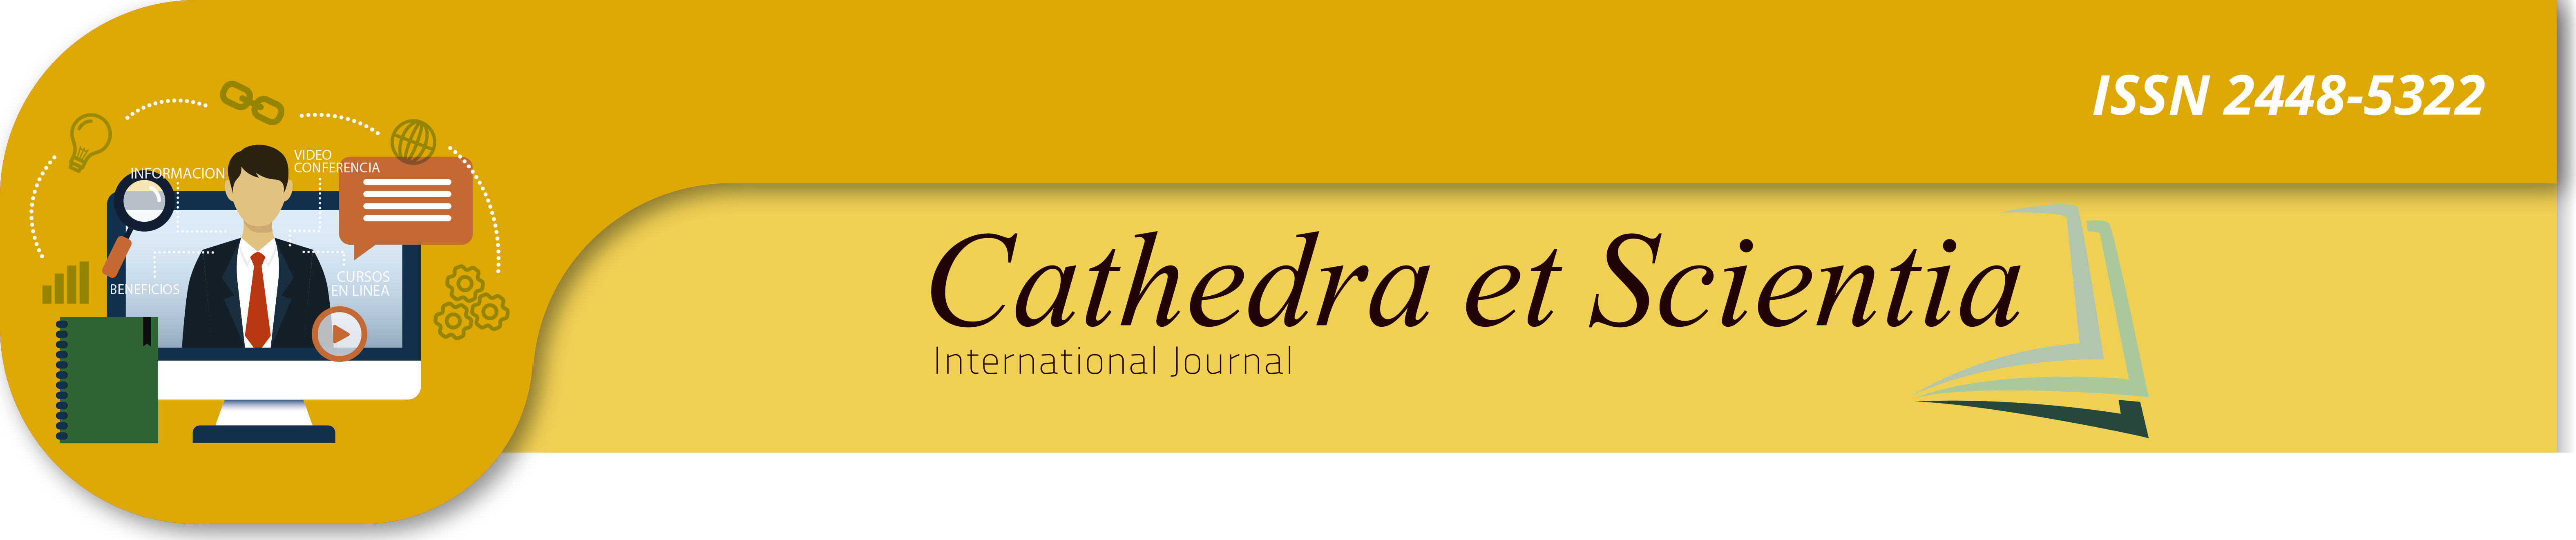 cathedra_et_scientia_international_journal.png